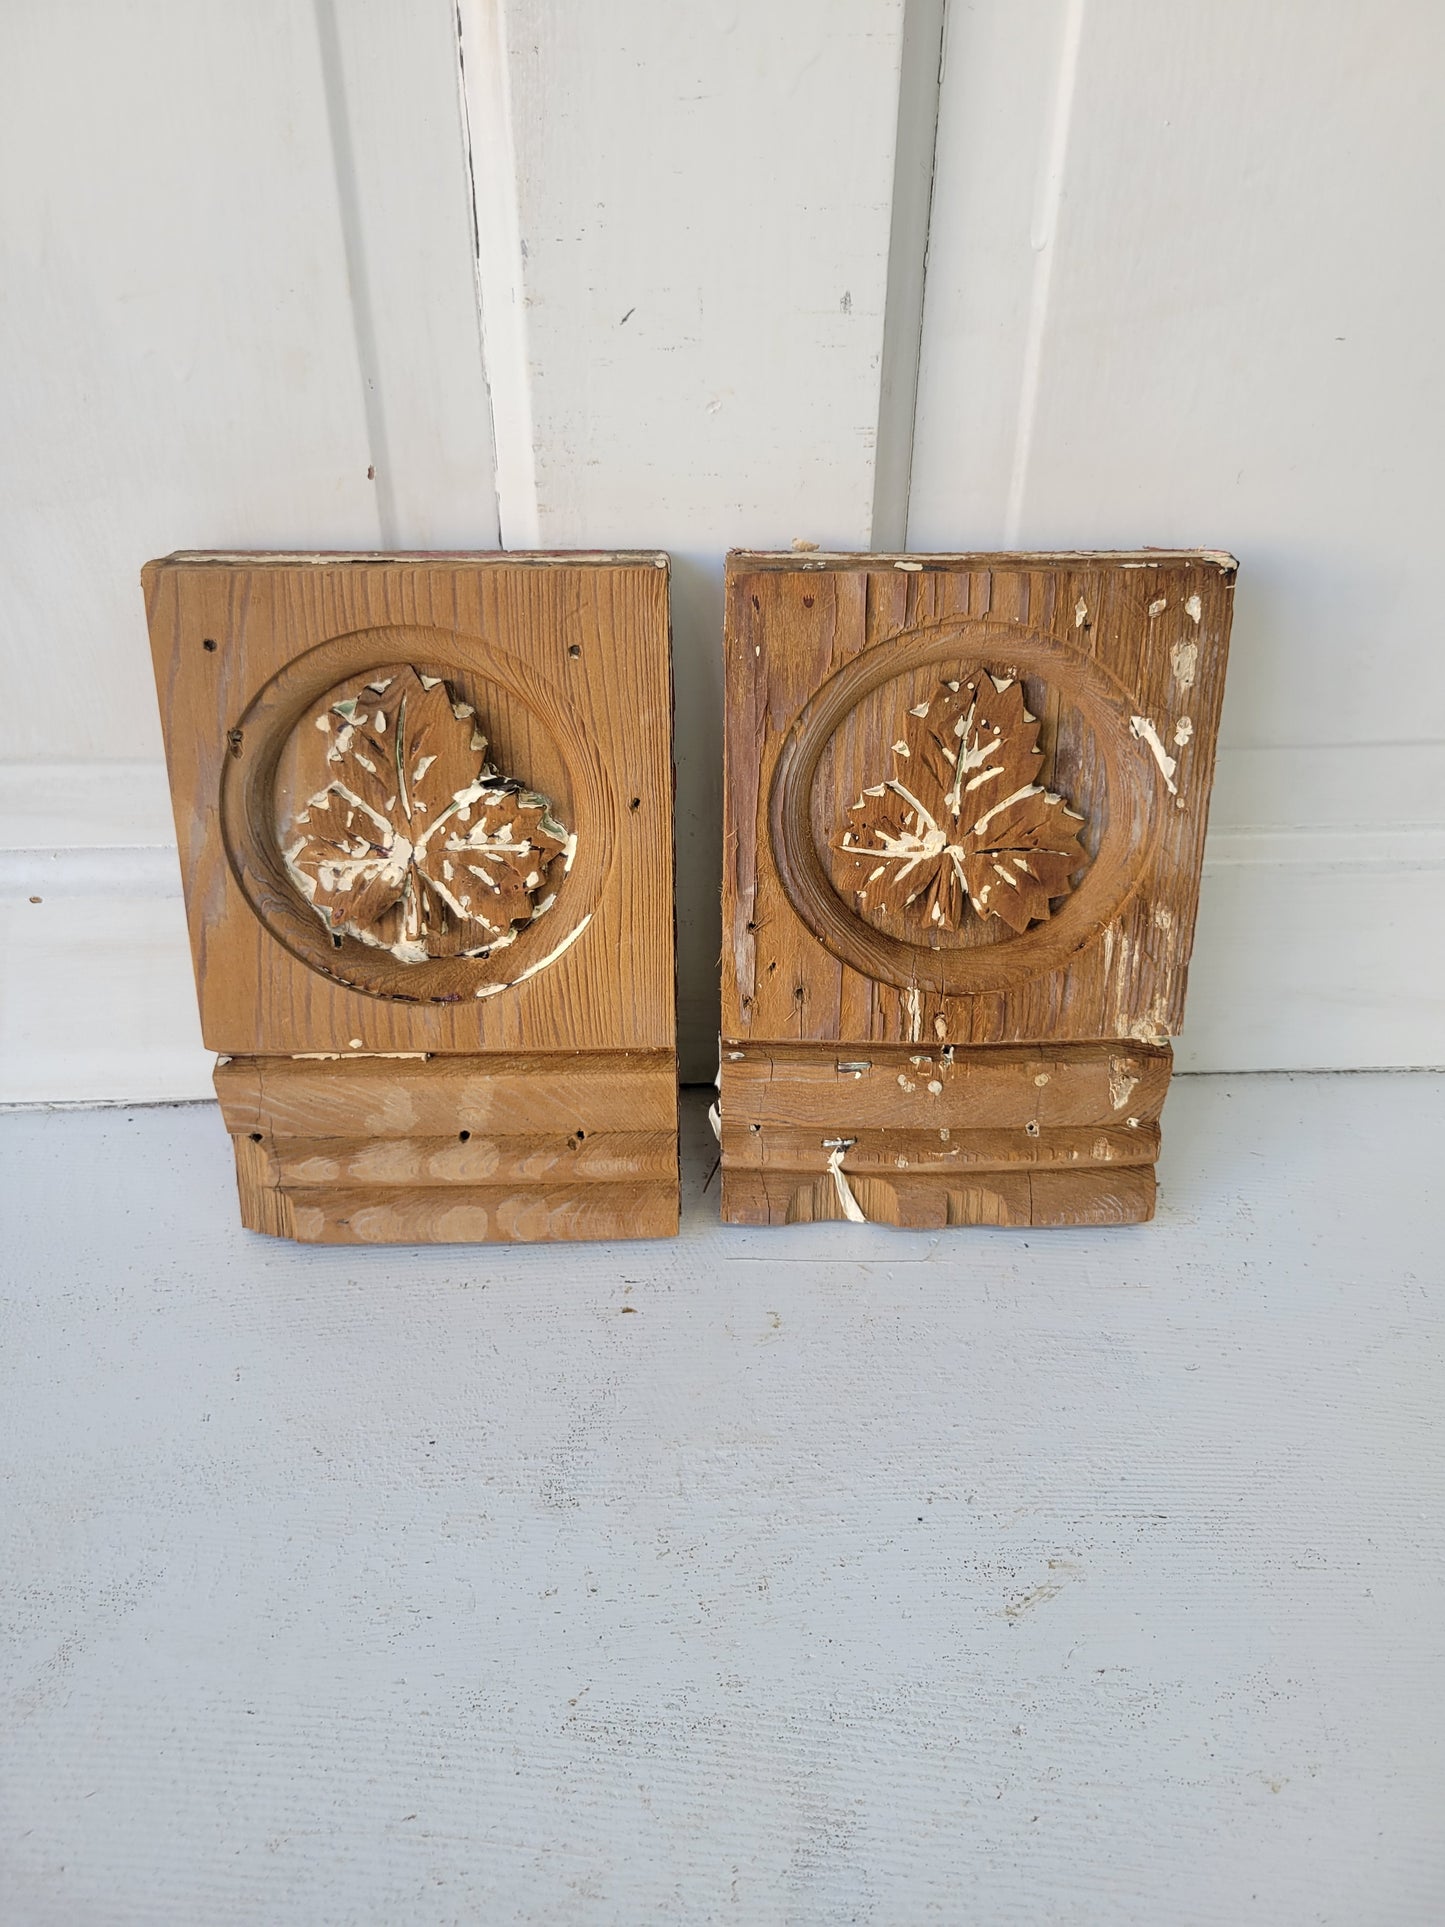 Pair of Maple Leaf Carved Trim Blocks, Antique Corner Blocks with Applied Leaf Design, Architecture Salvage 090401